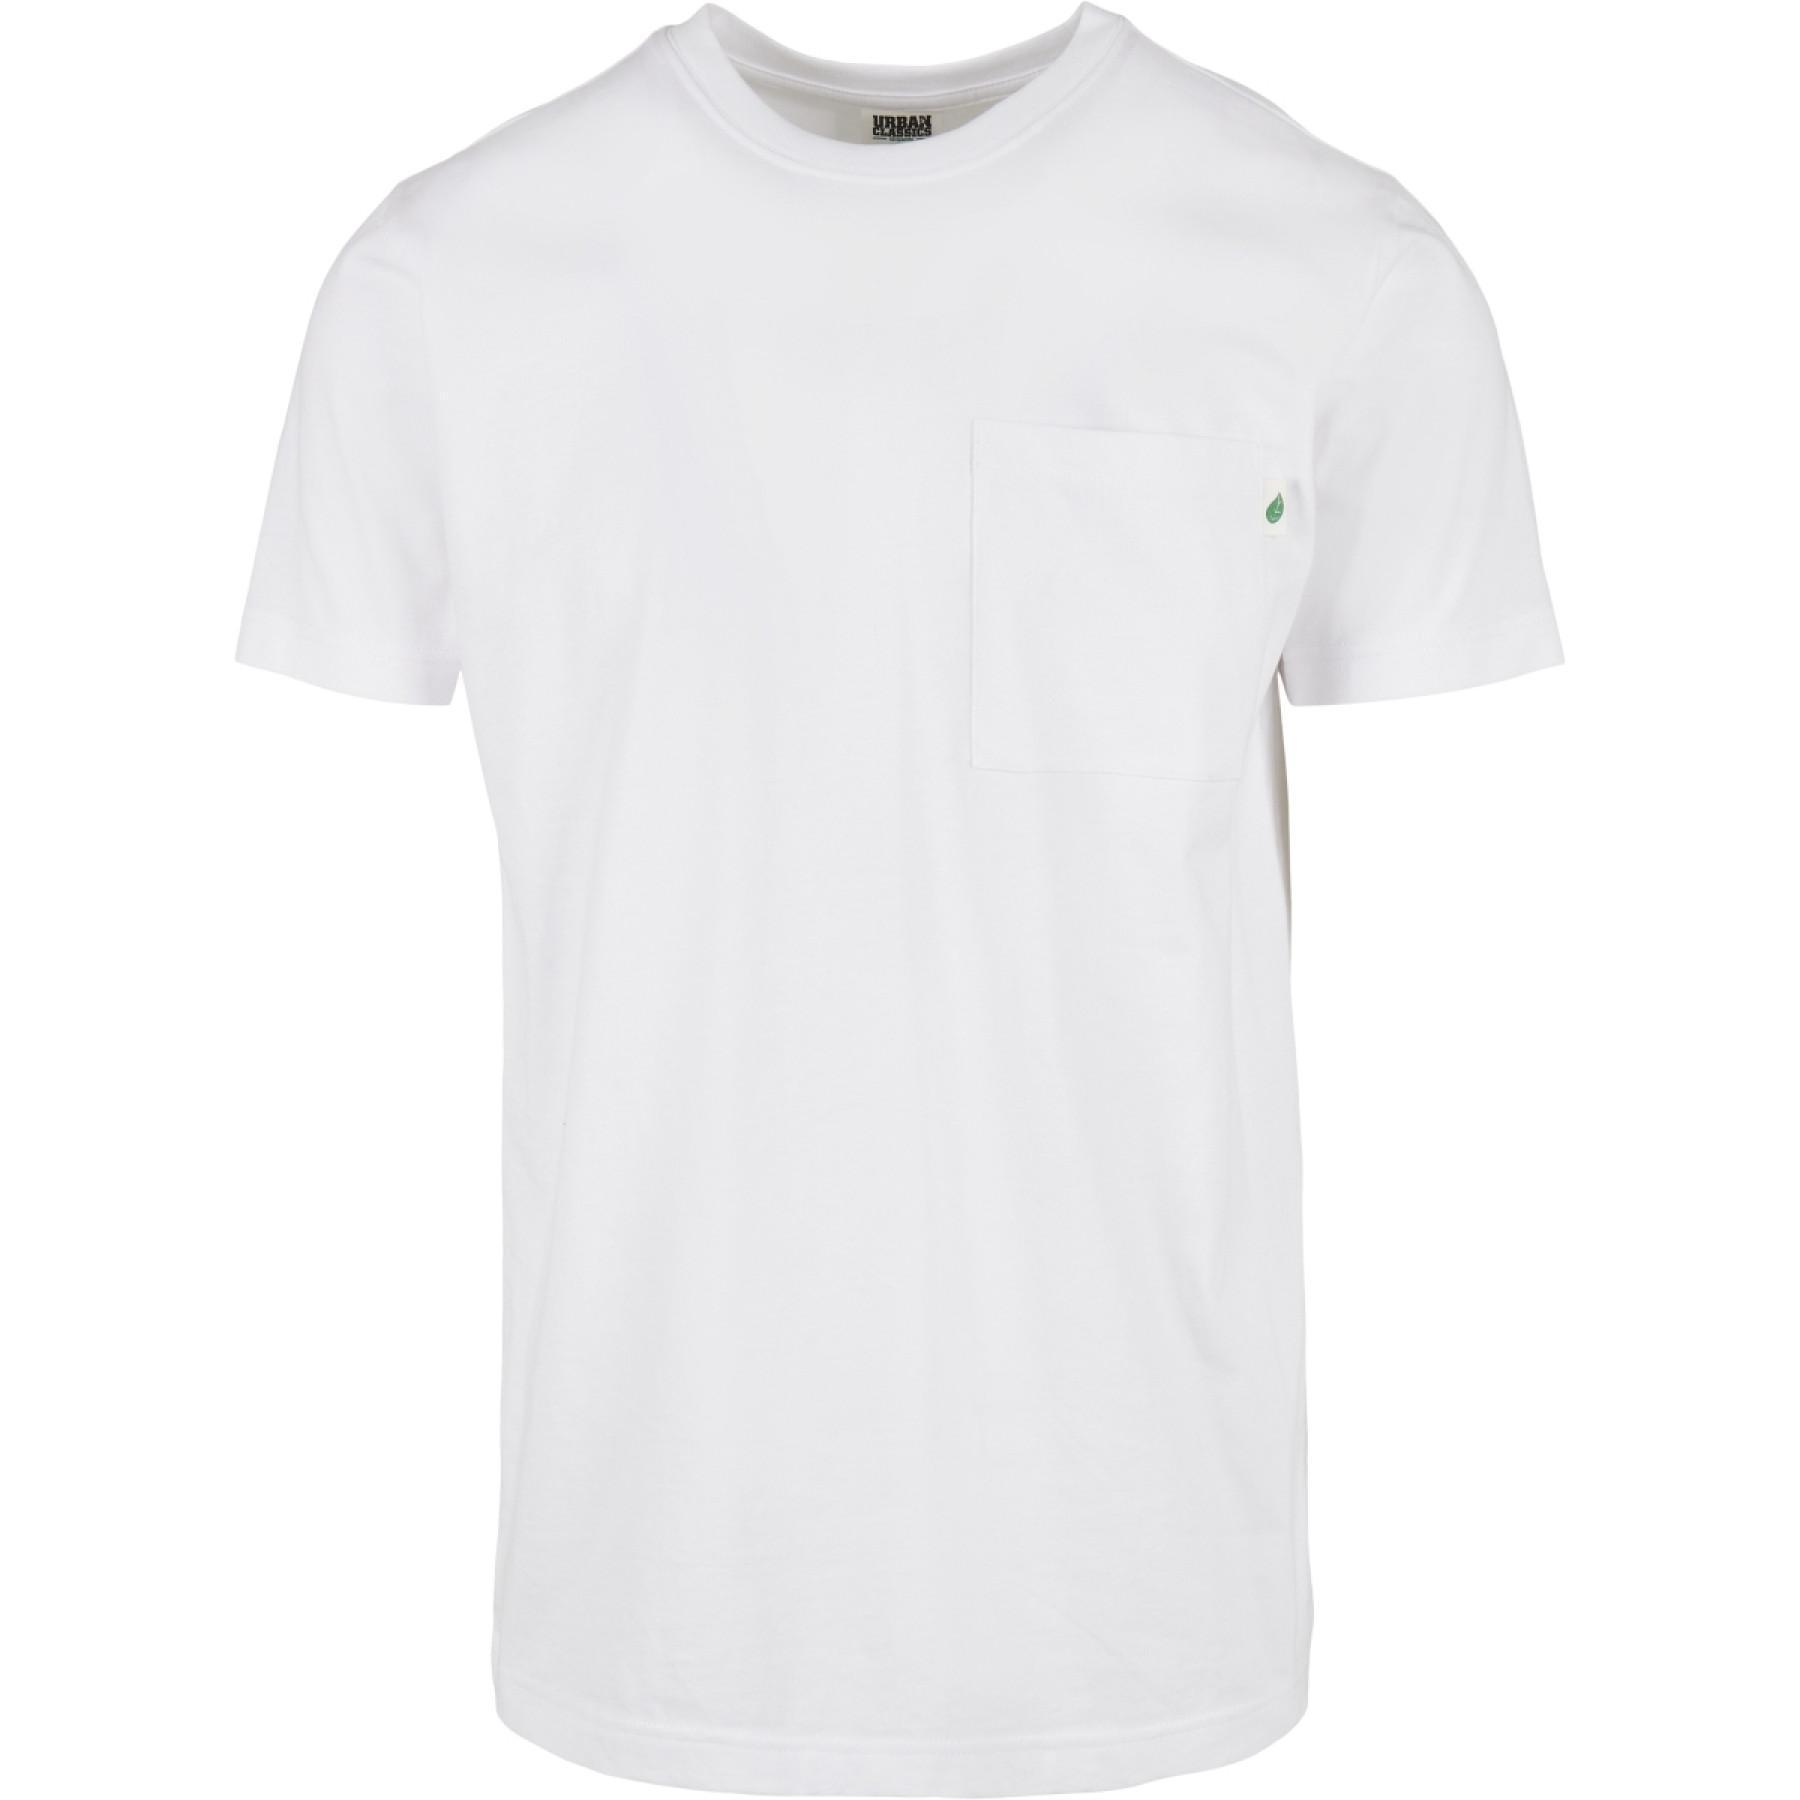 T-shirt Urban Classics cotone organique basic pocket-taglie grandi